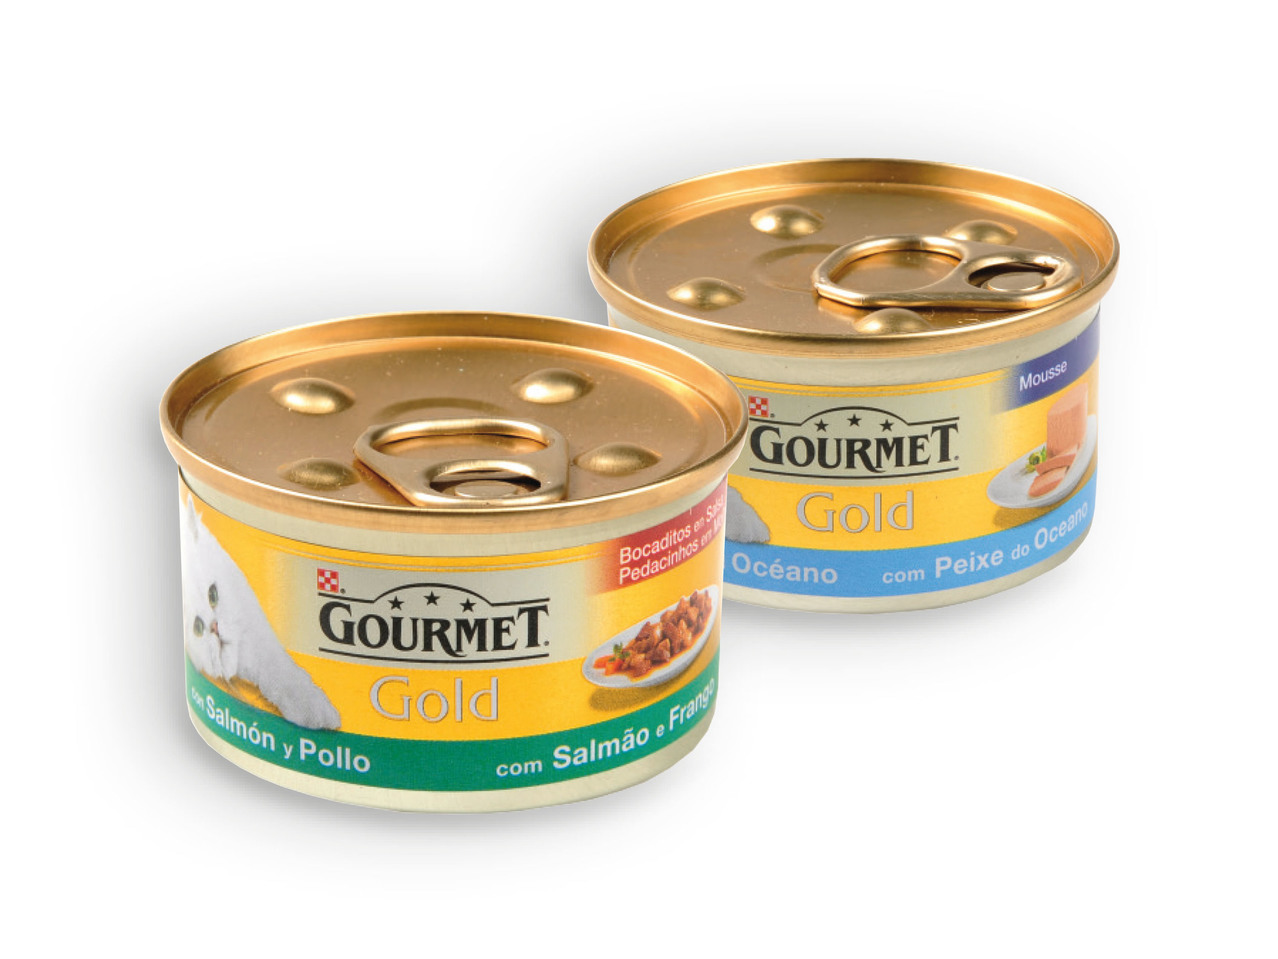 GOURMET(R) Alimento para Gatos